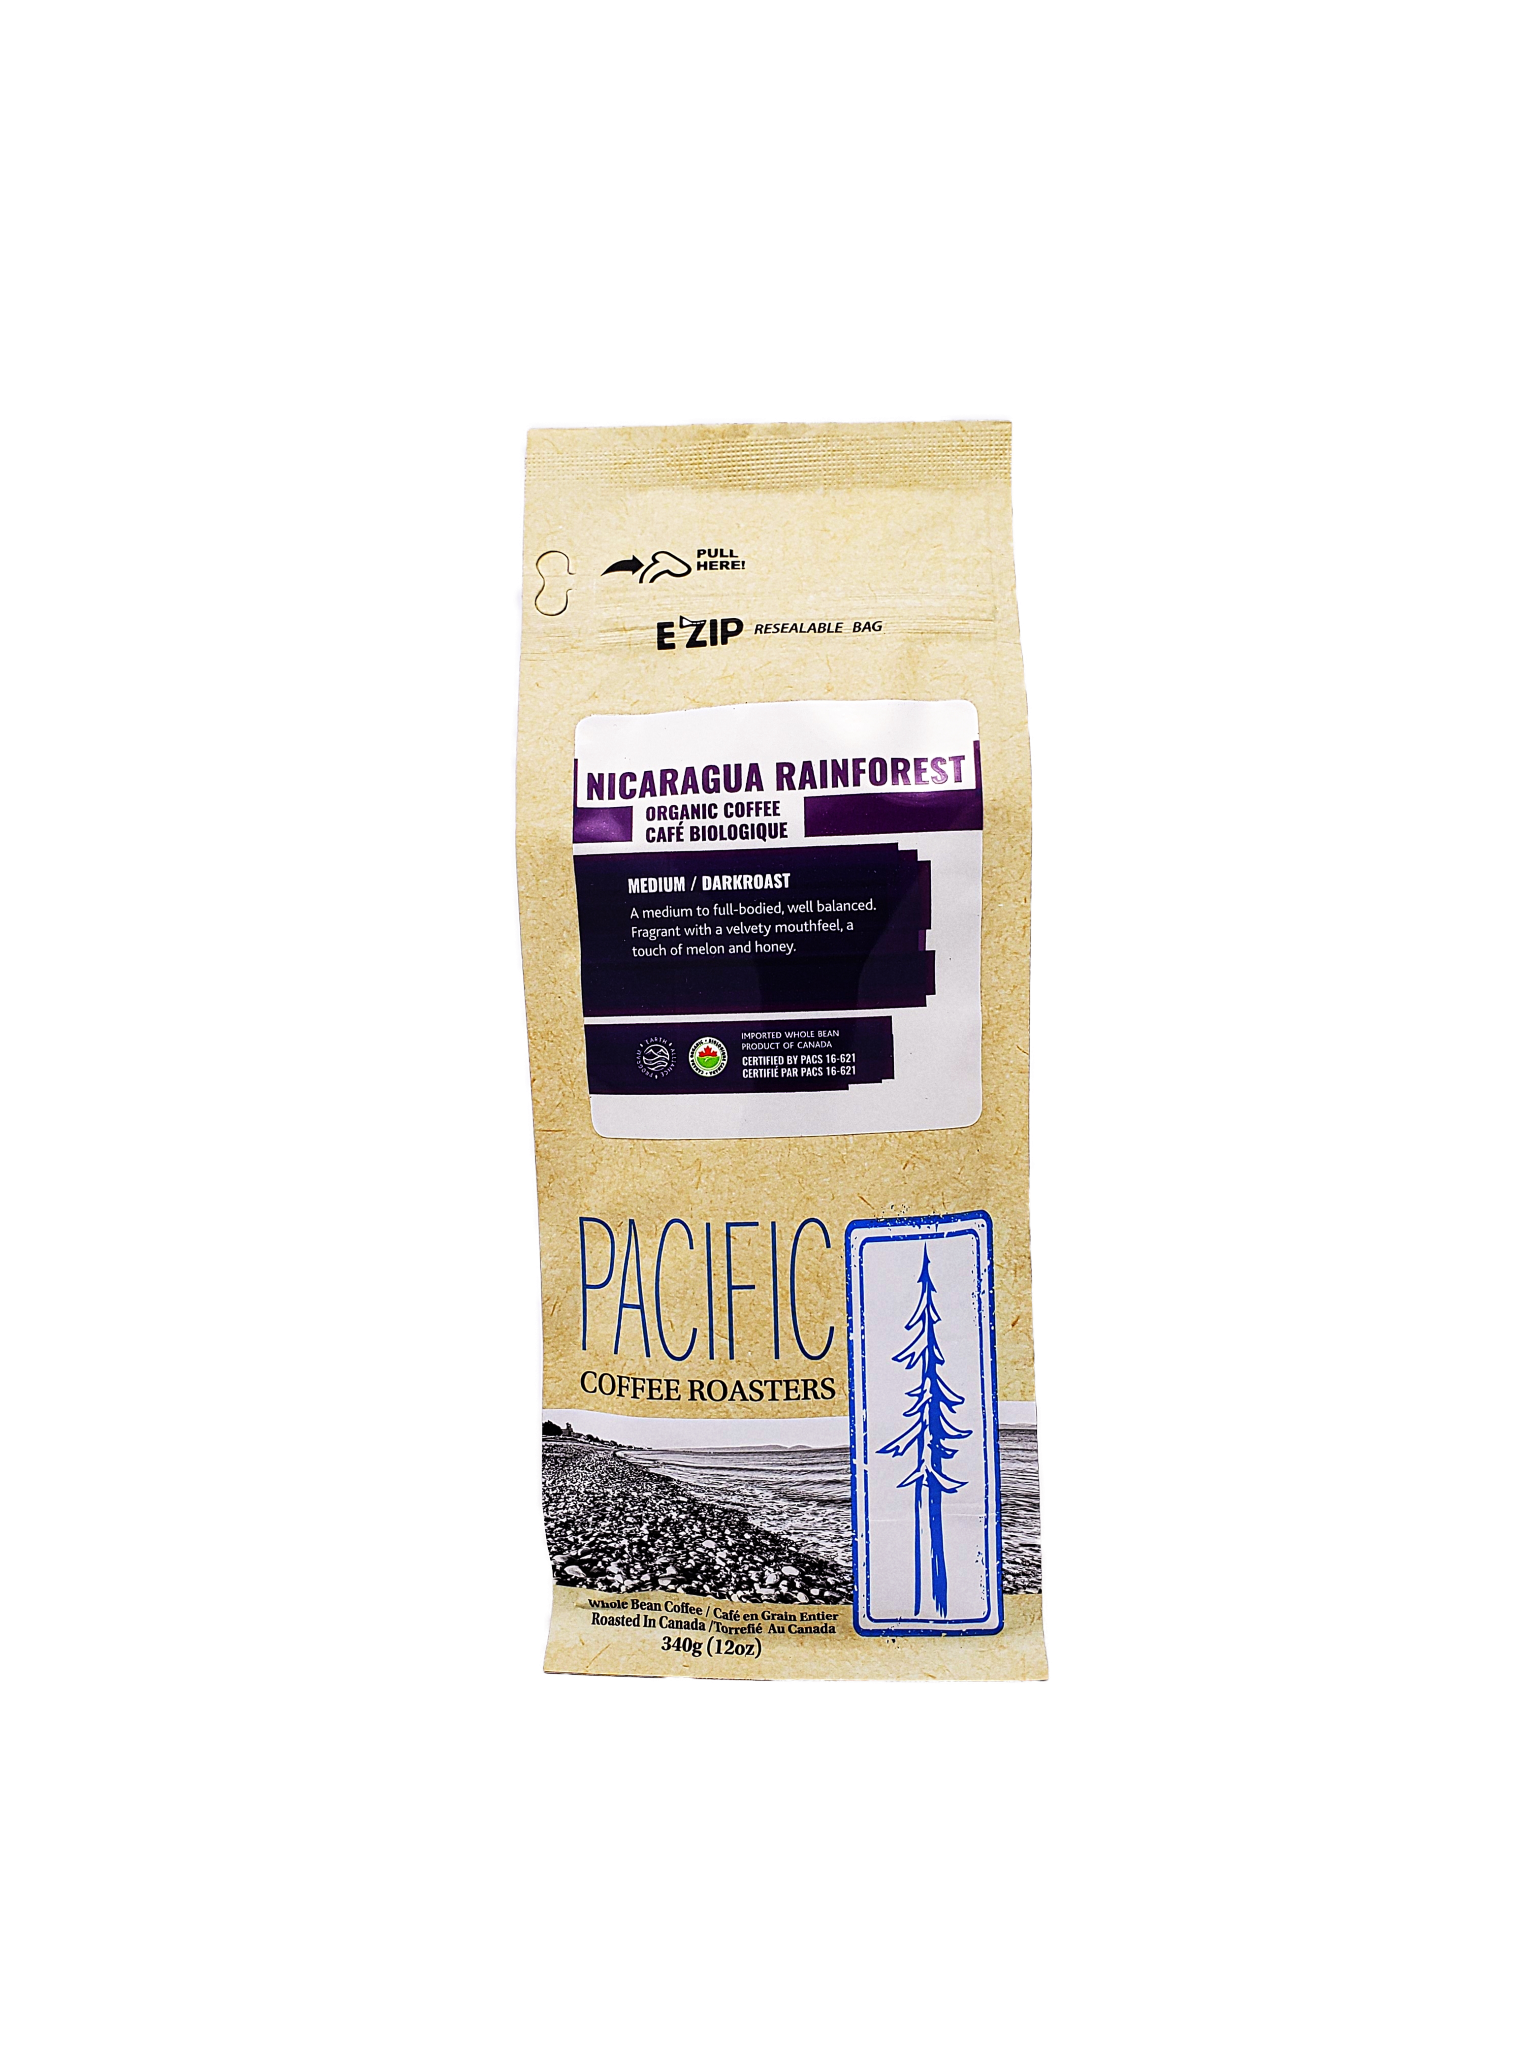 Organic Nicaragua - Pacific Coffee Roasters Direct